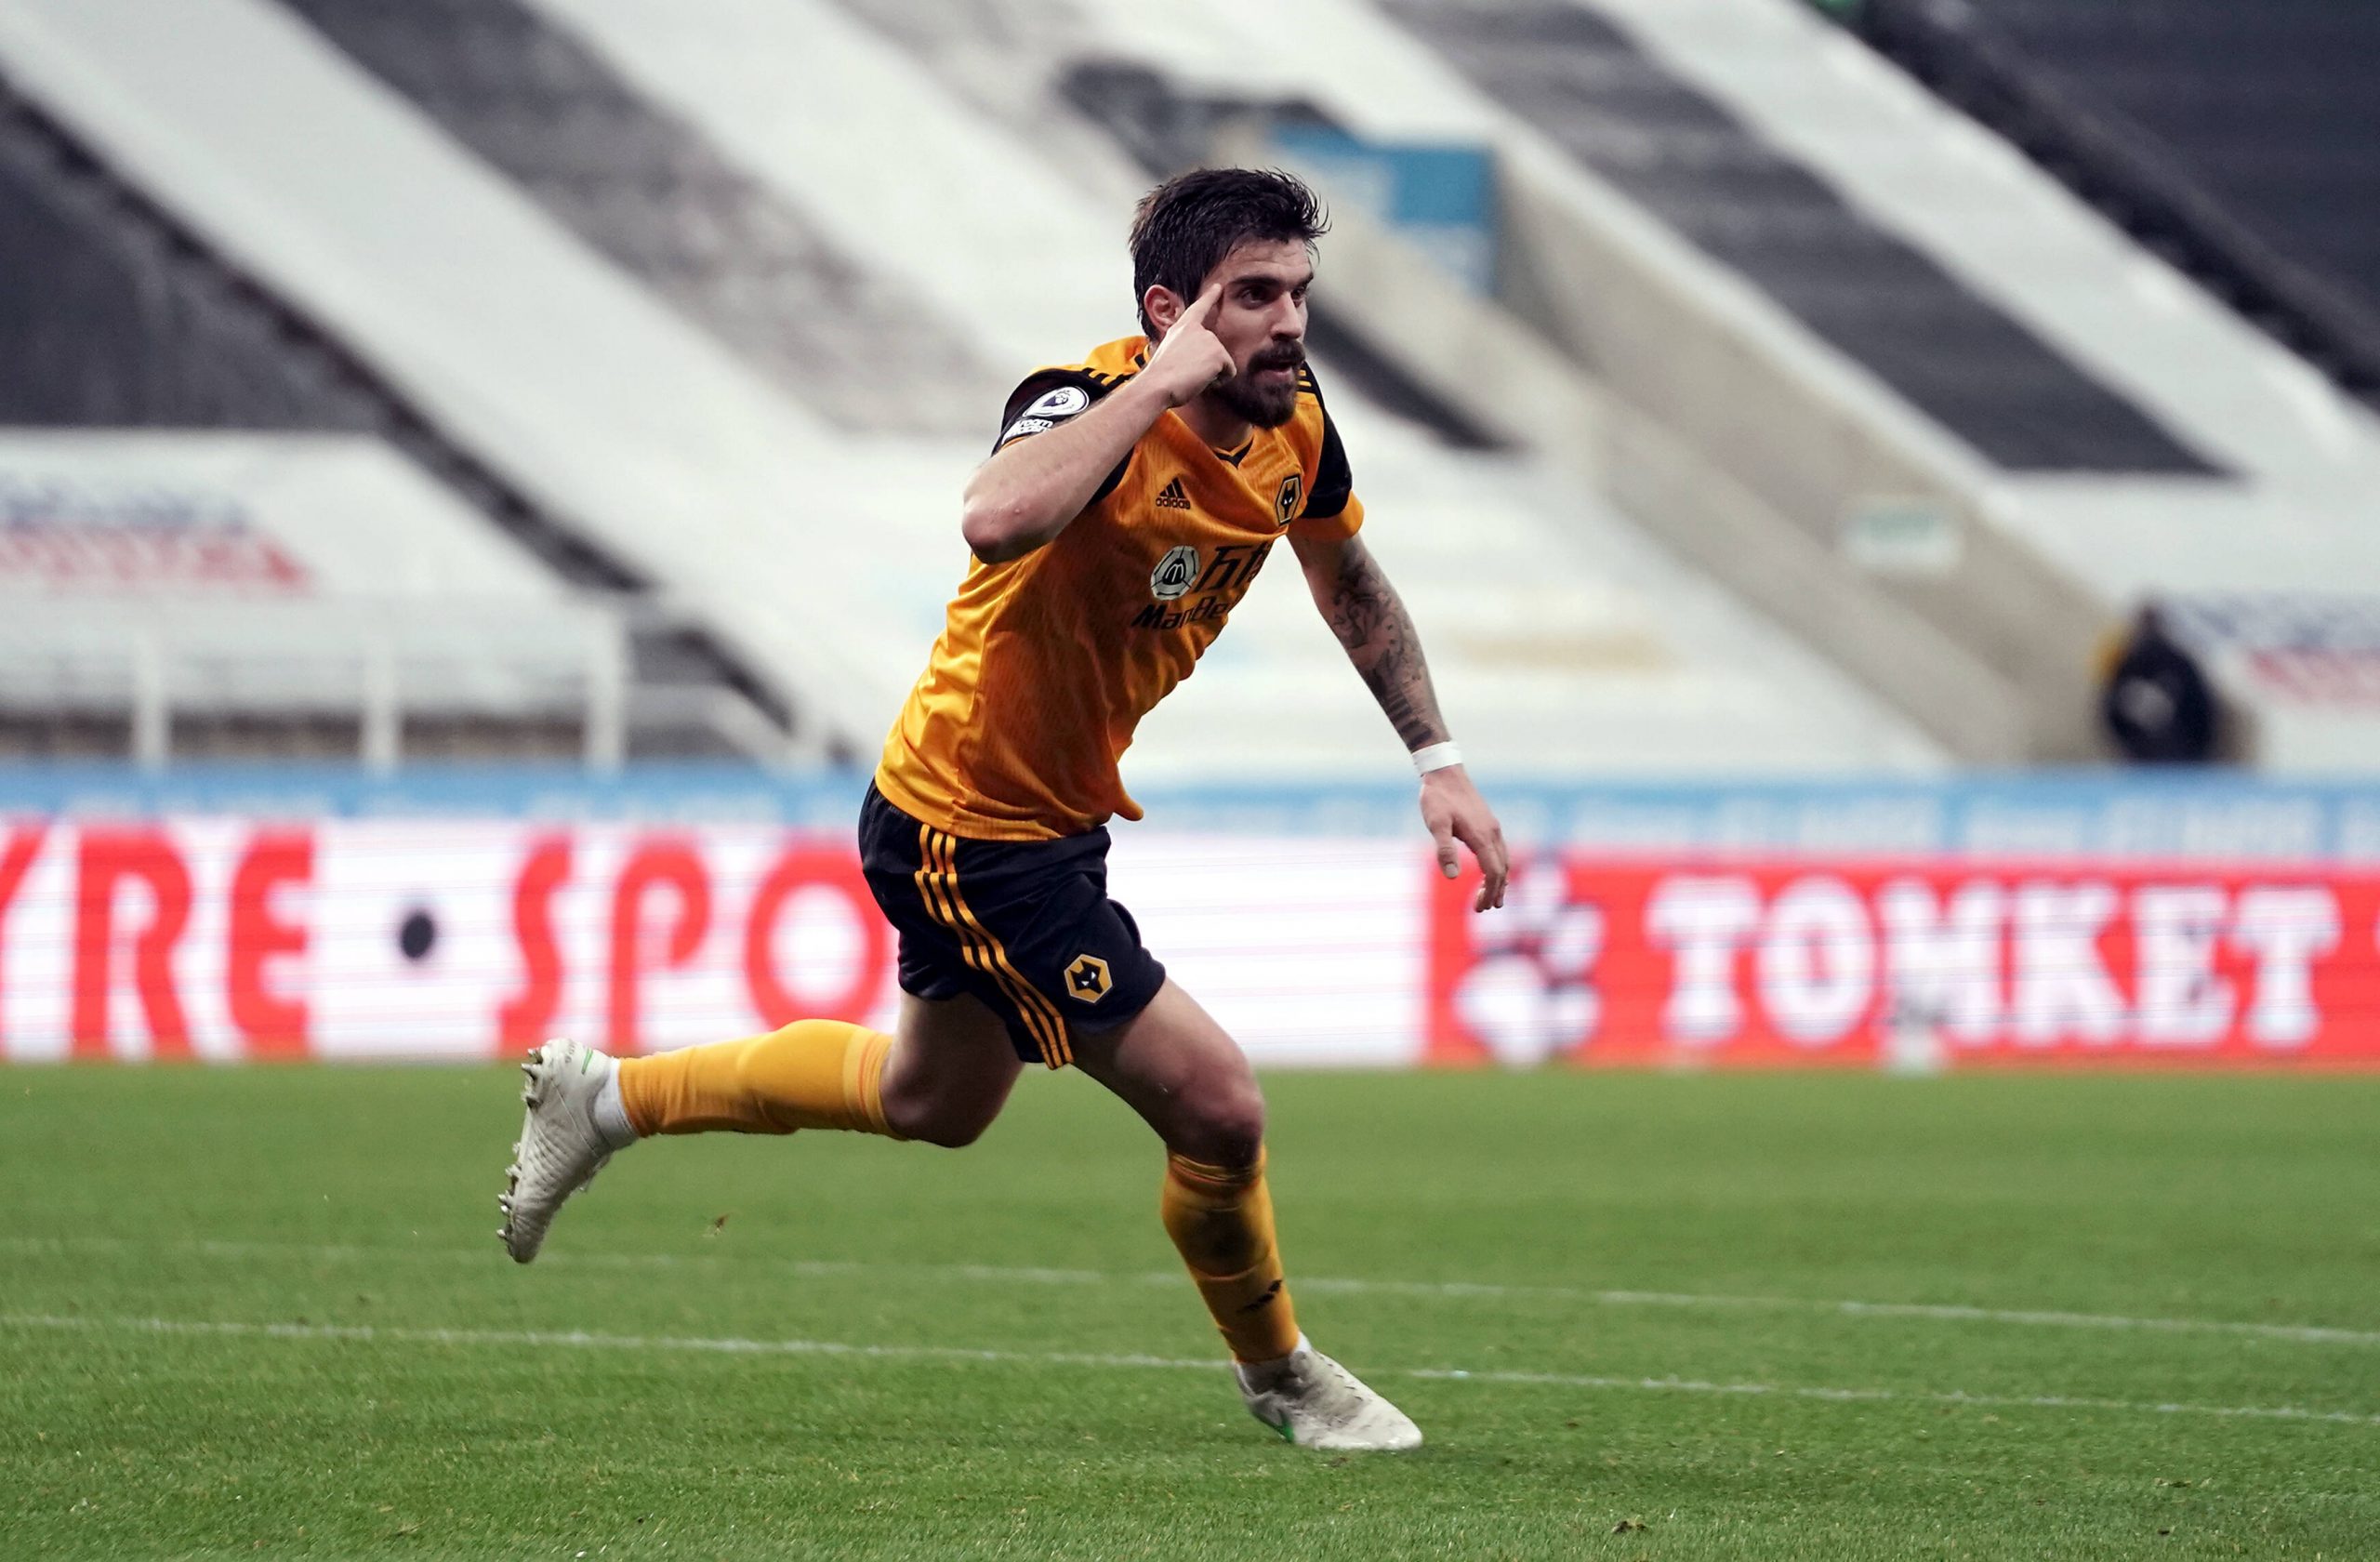 Ruben Neves celebrates scoring a goal for Wolverhampton Wanderers.